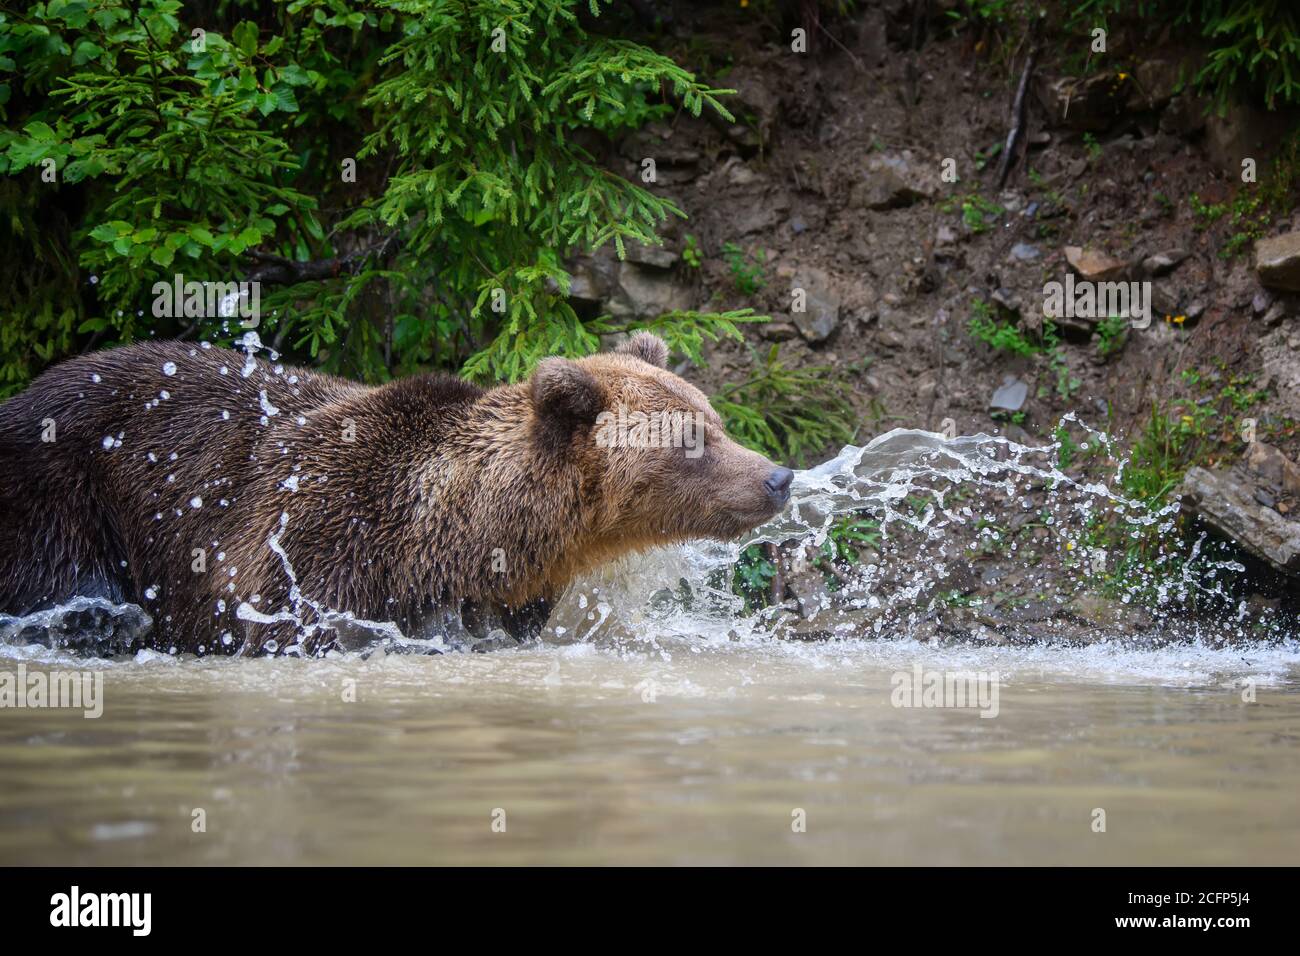 Wild adult Brown Bear (Ursus Arctos) splashing in the forest lake. Dangerous animal in nature. Wildlife scene Stock Photo